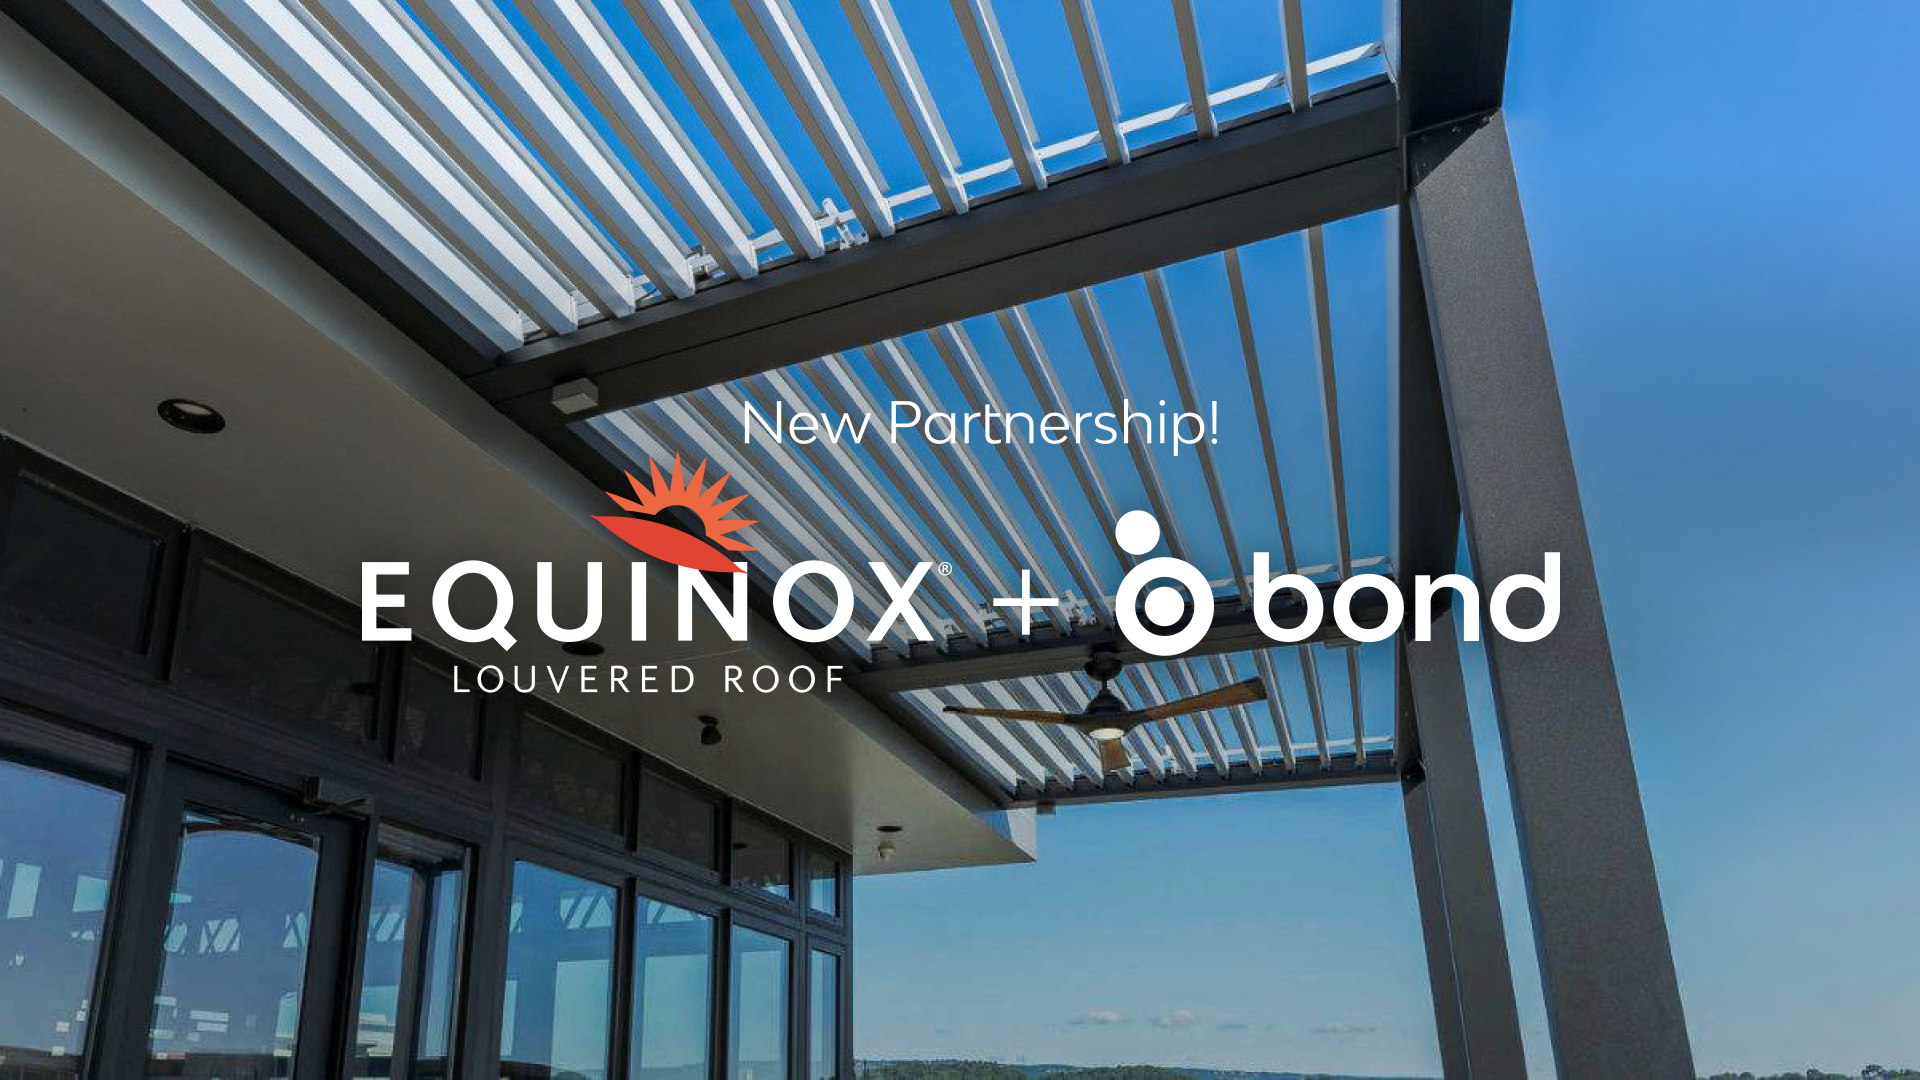 New Partnership! Equinox